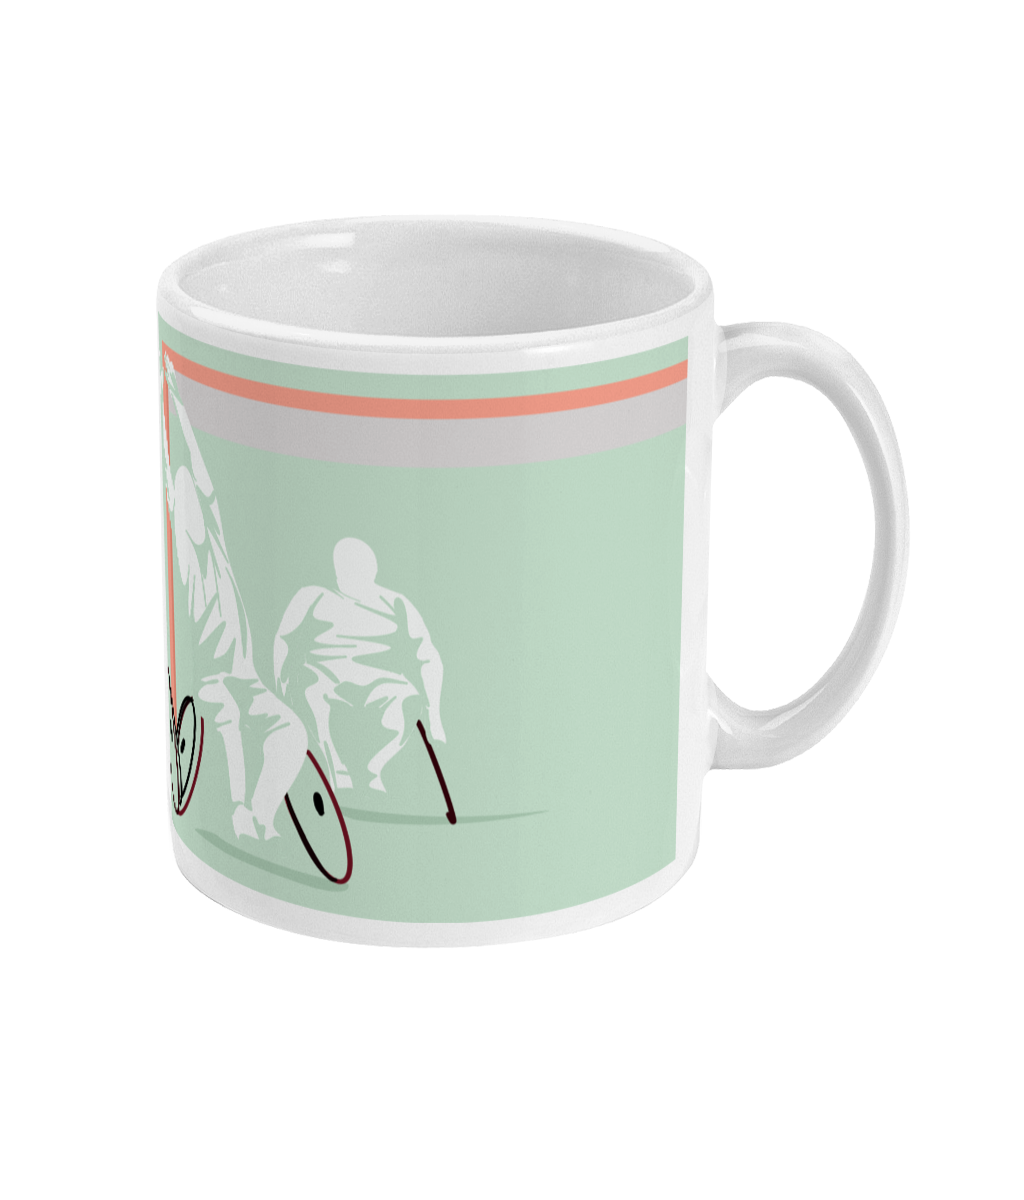 Handchair cup or mug "Handball team" - Customizable